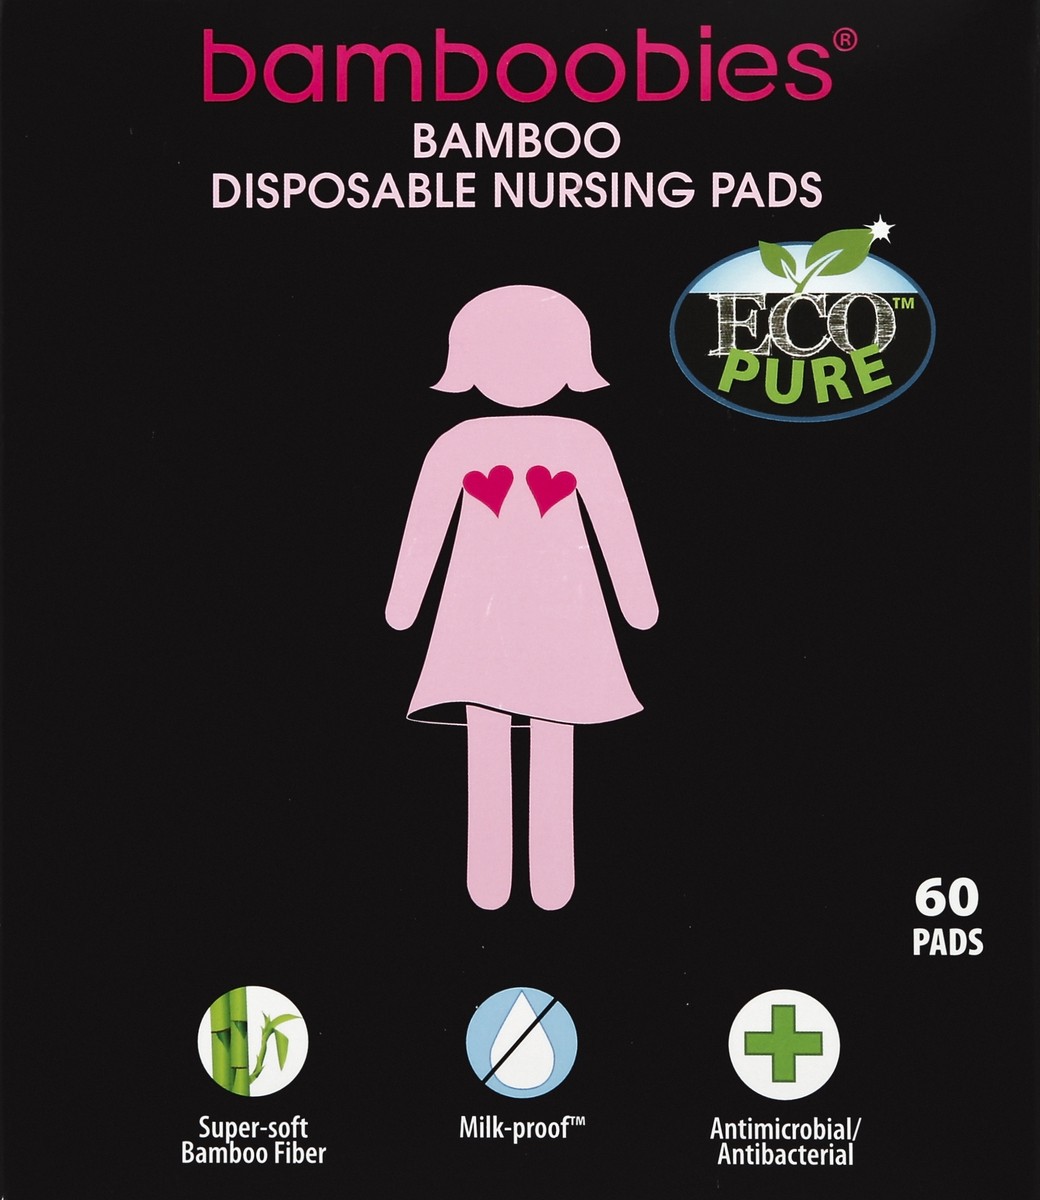 Bamboobies disposable nursing pads (60 count)